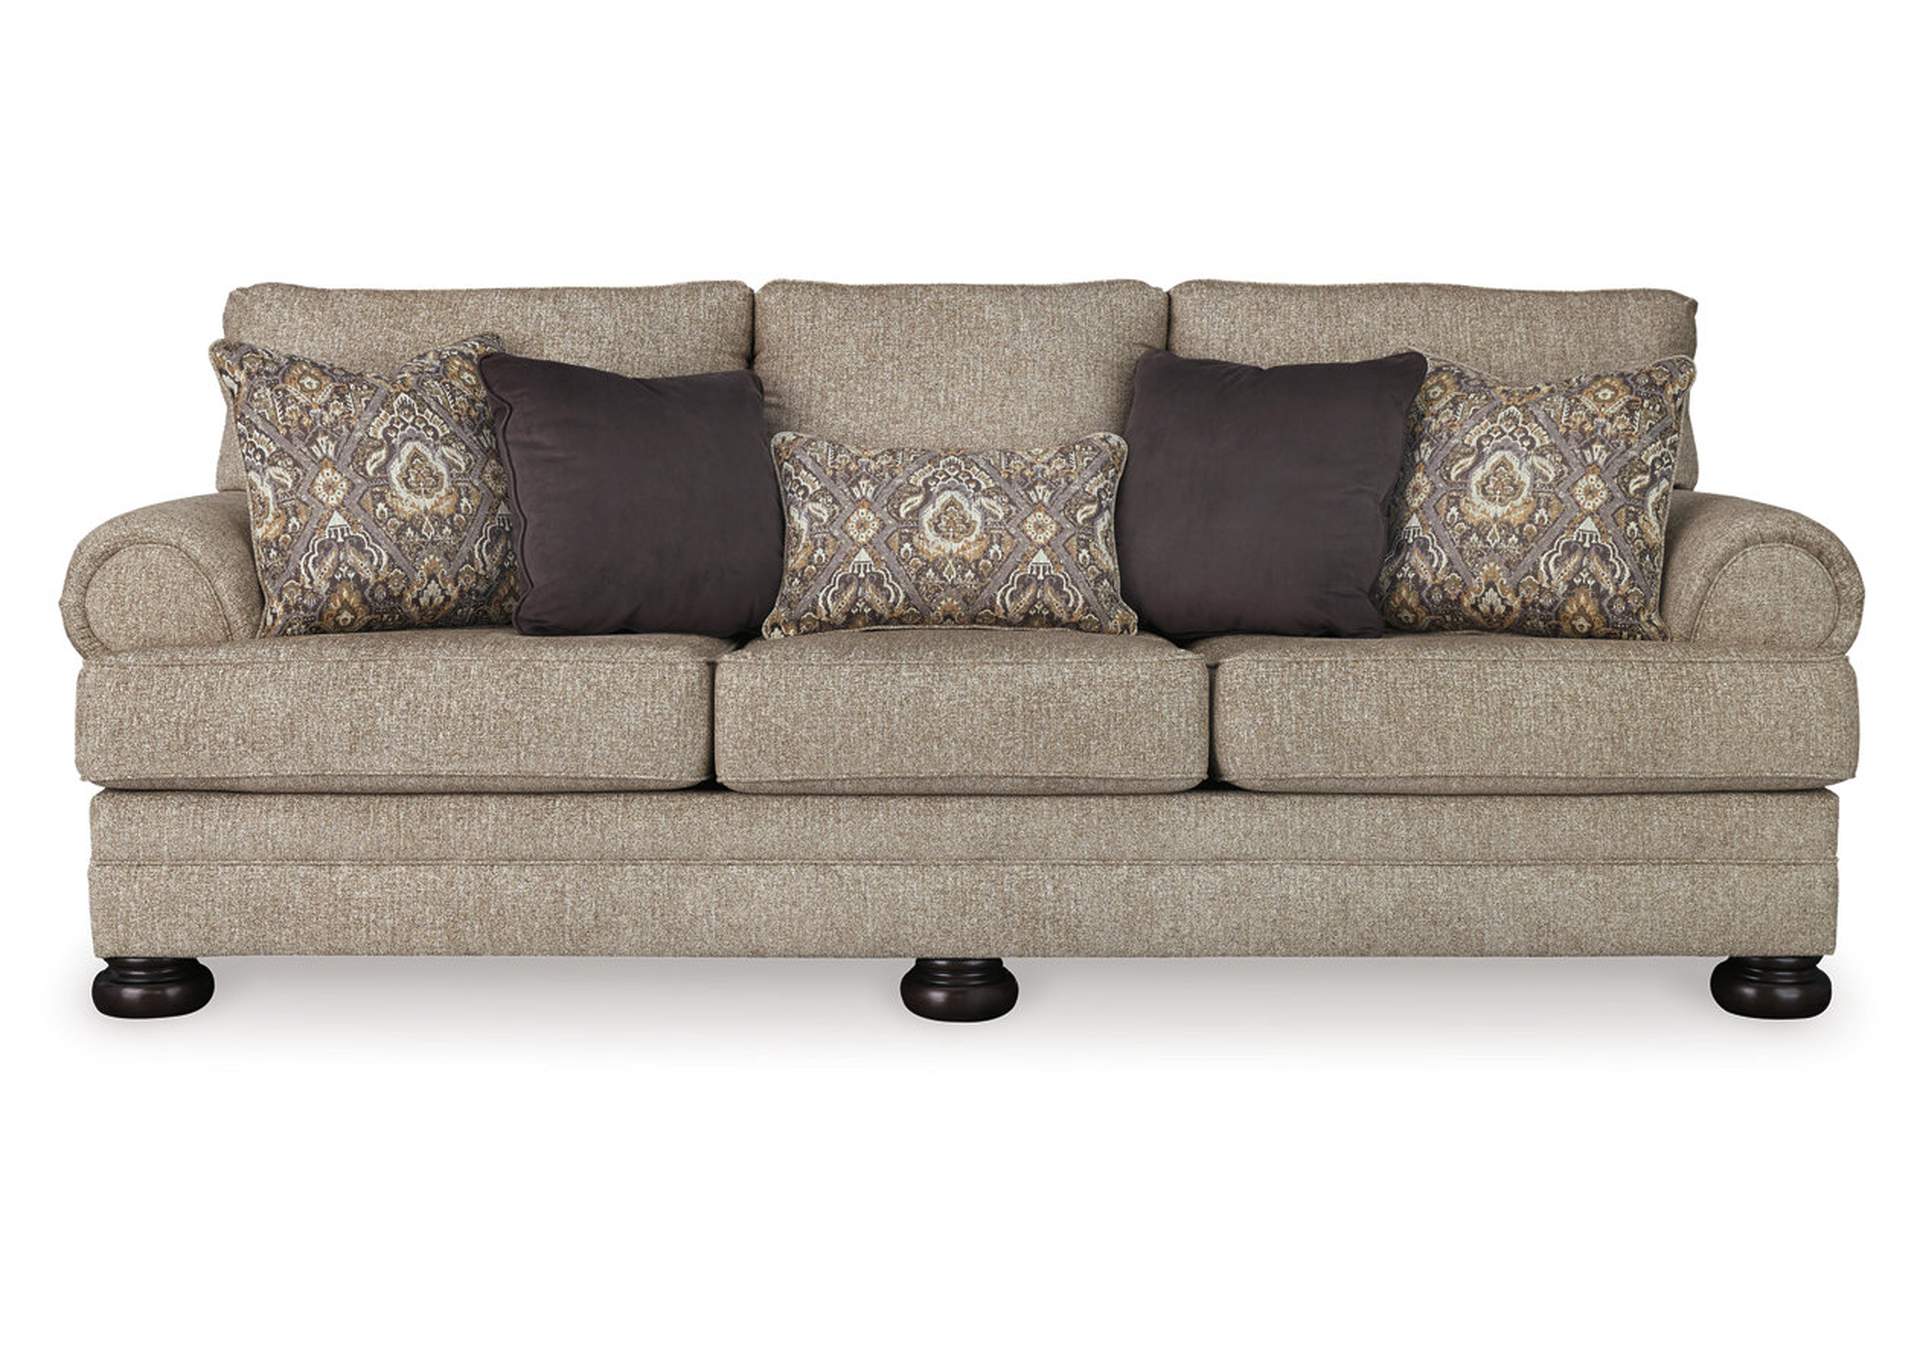 Kananwood Sofa, Loveseat, Chair and Ottoman,Signature Design By Ashley